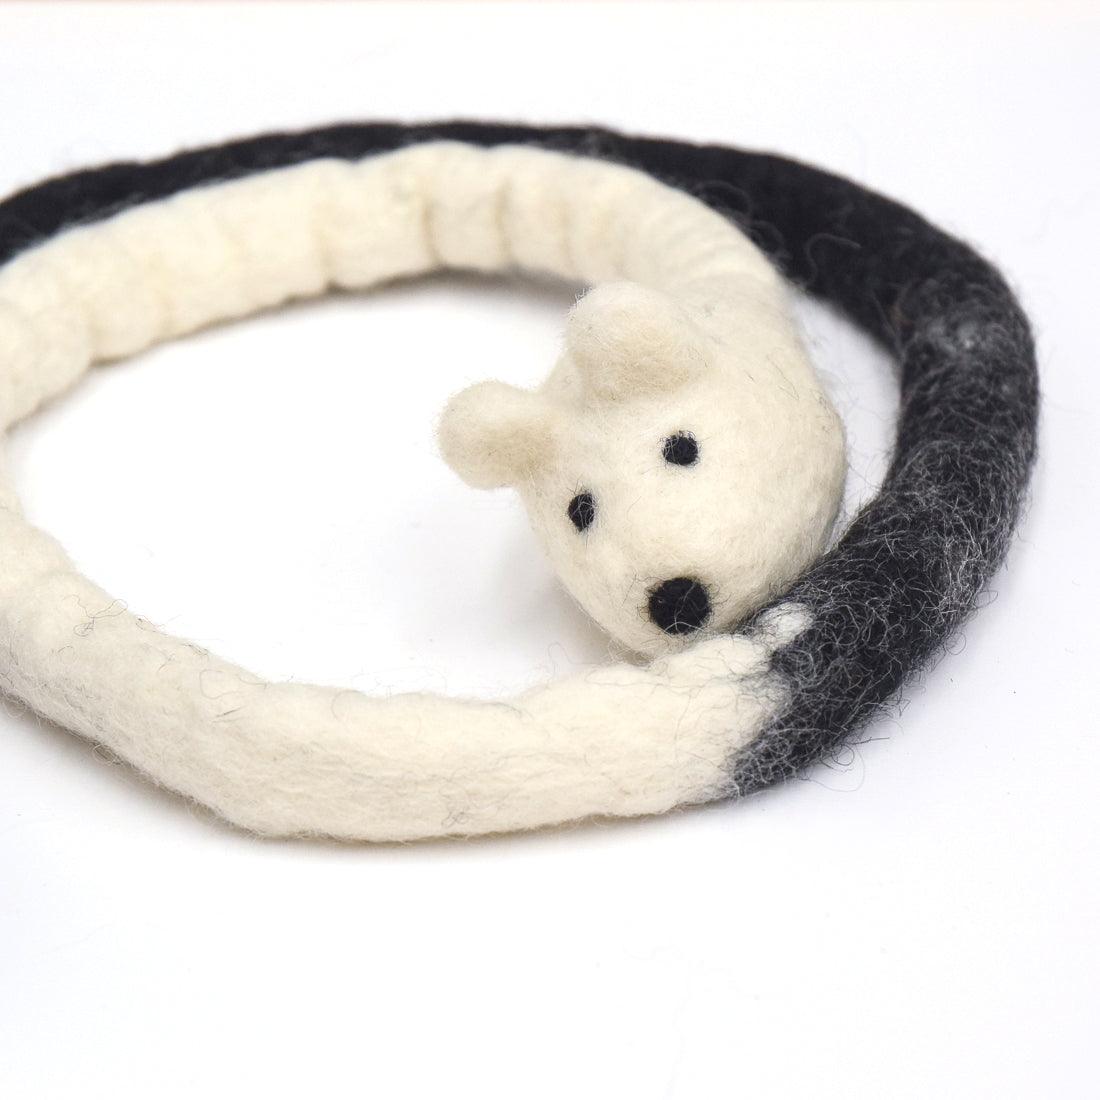 Felt Mouse Teaser Cat Toy - Black and White - Tara Treasures